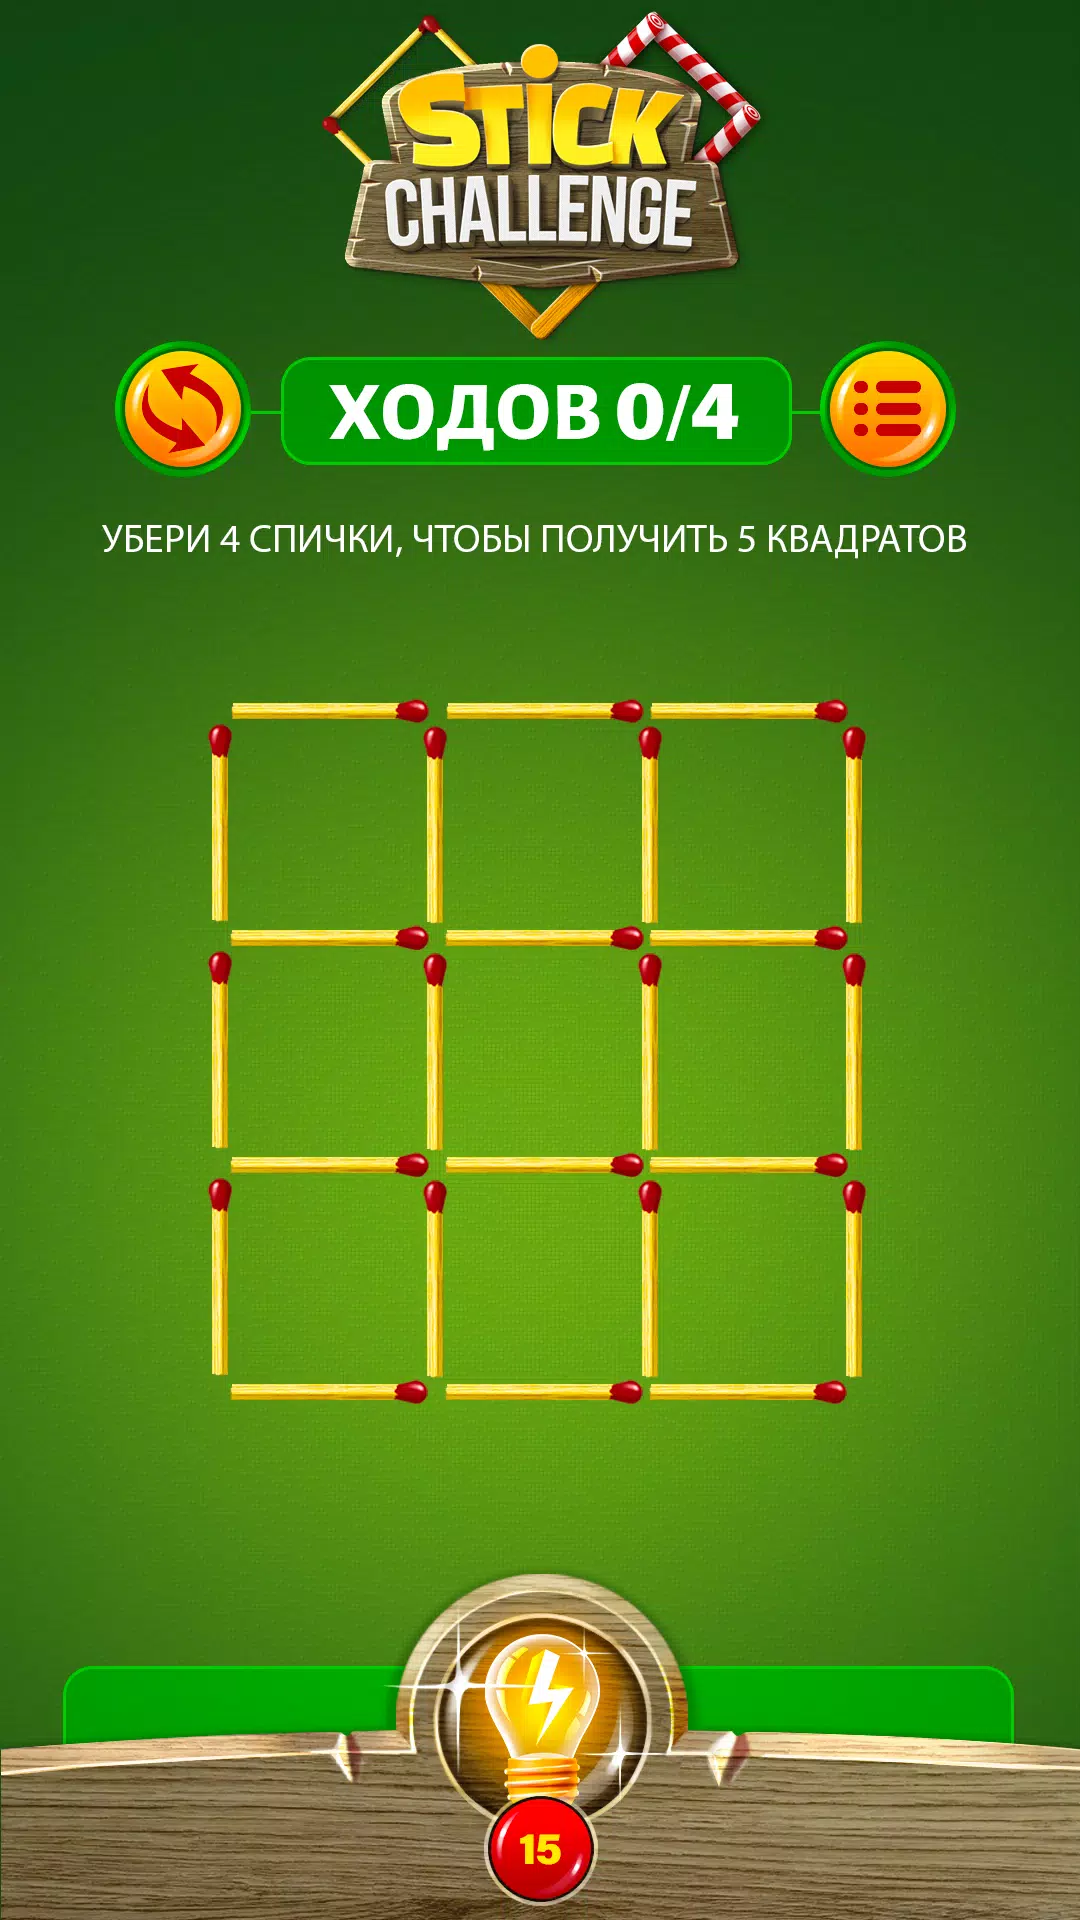 Download do APK de Desafio Palito Matemático para Android